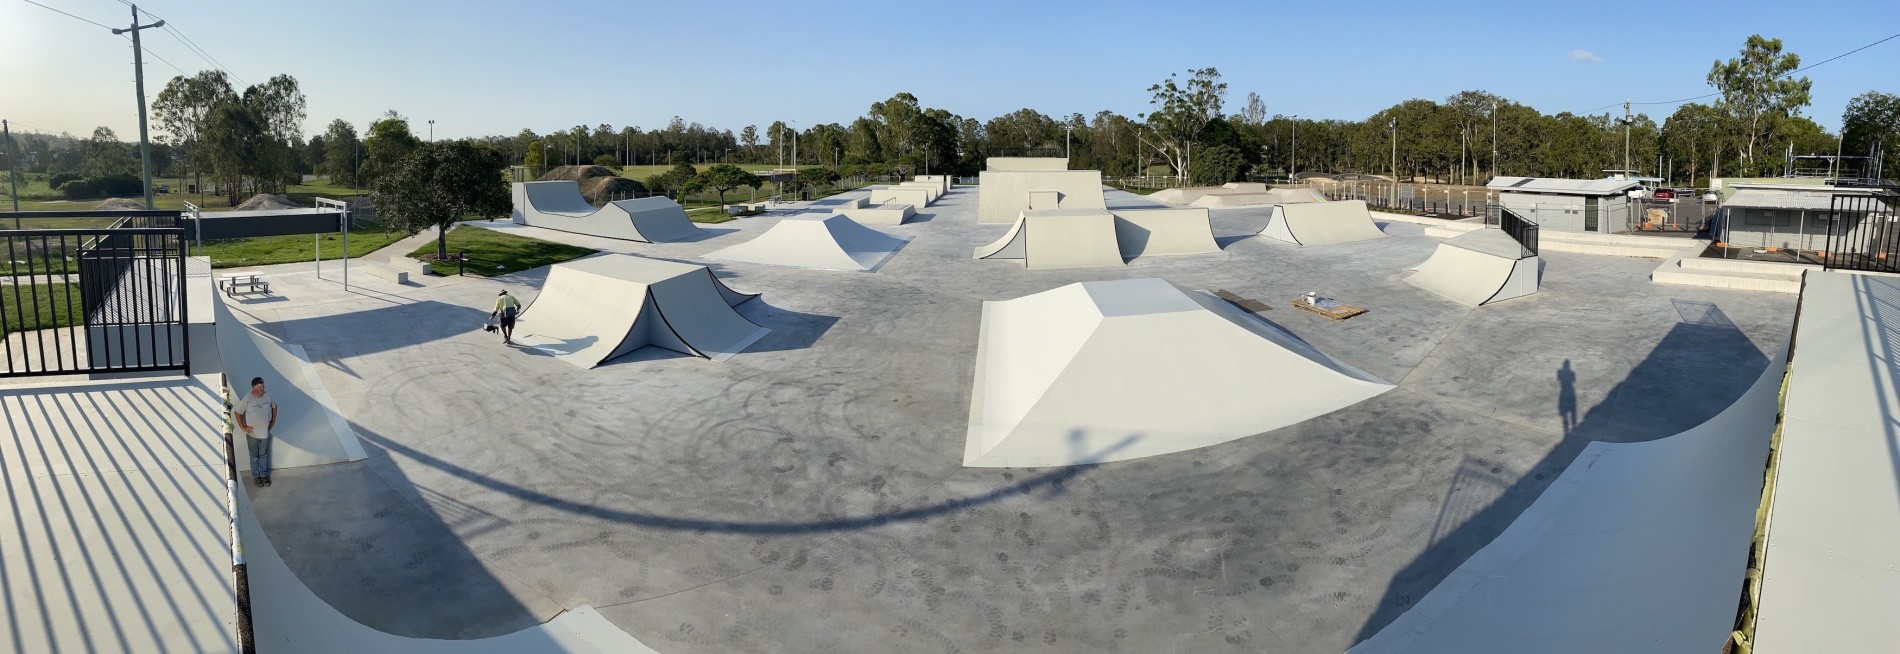 Beenleigh skatepark